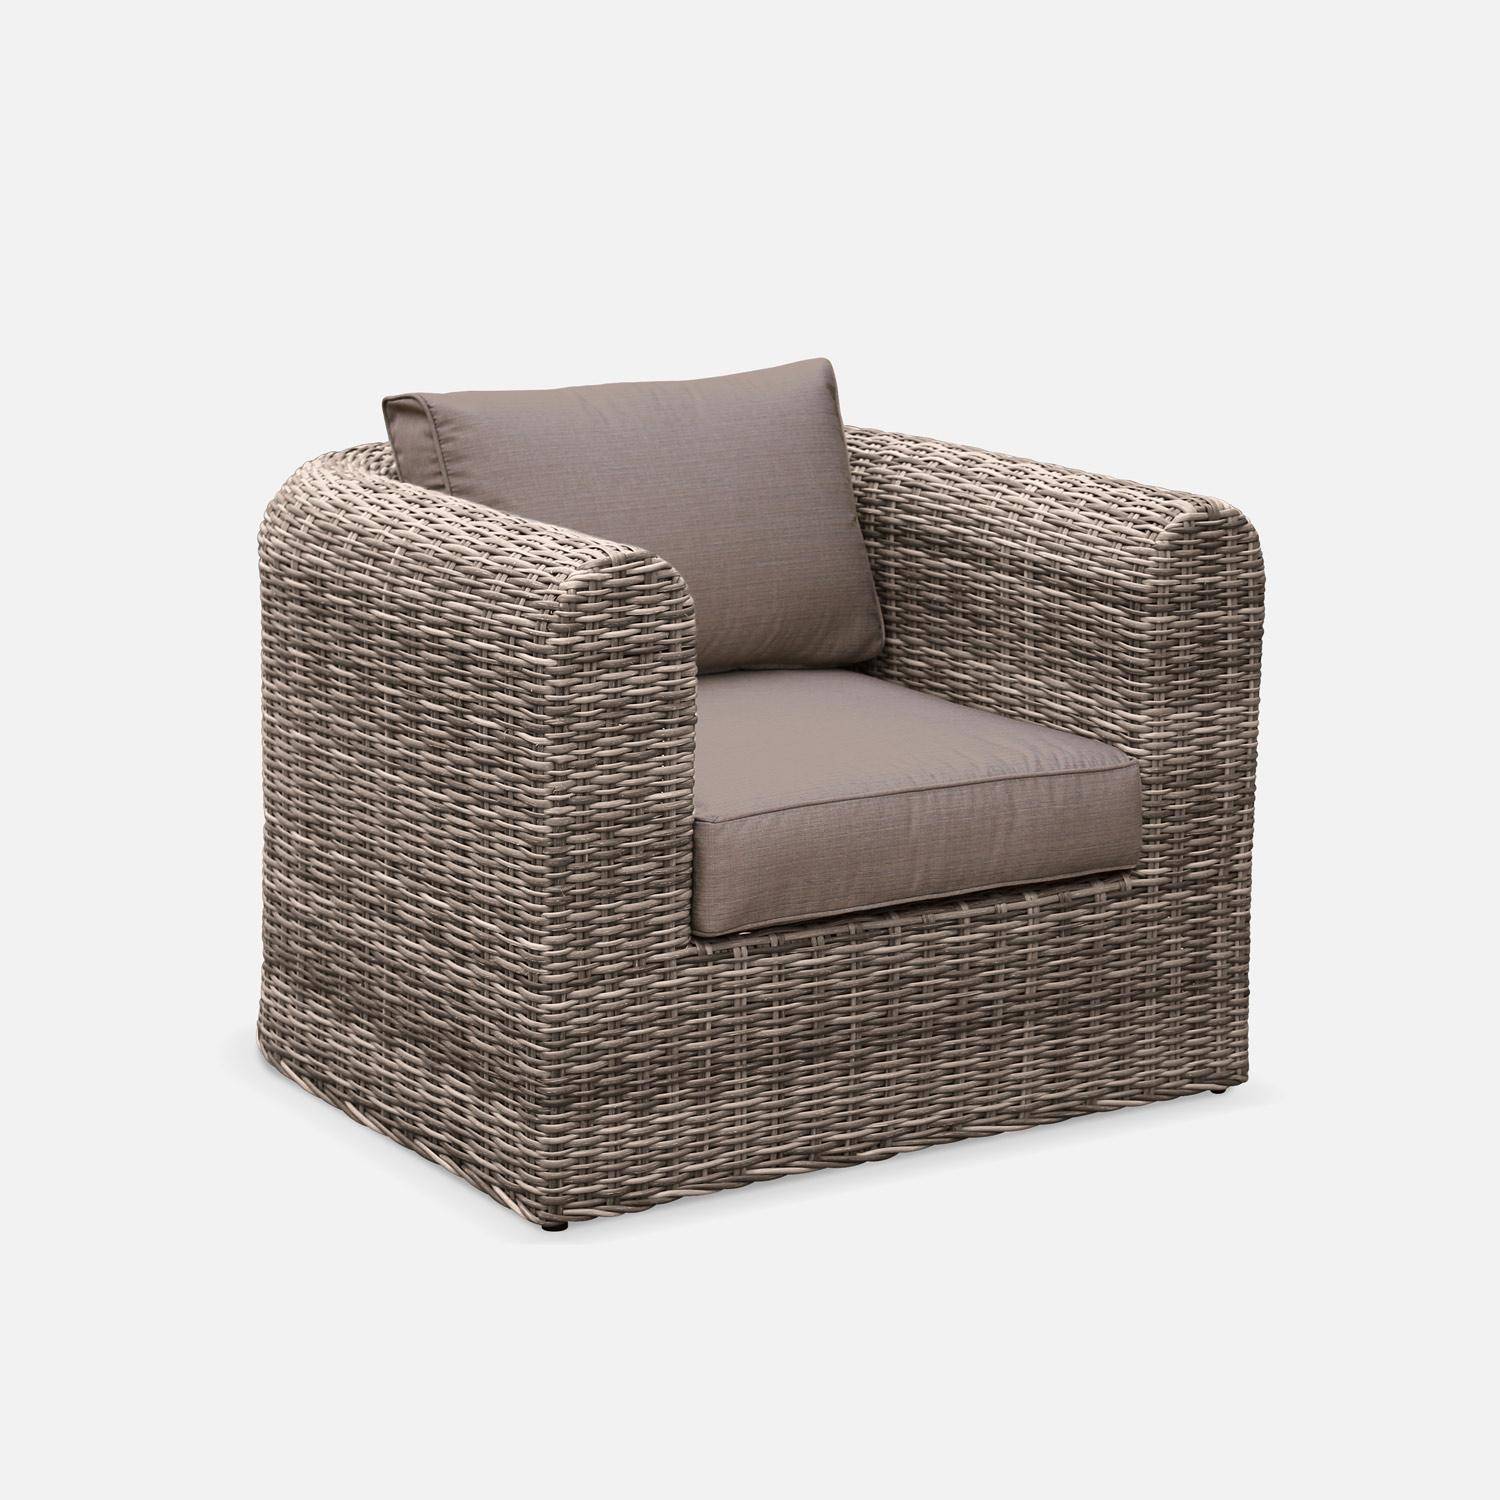 5-seater round rattan garden sofa set - 3-seater sofa, 2 armchairs, 1 coffee table - Juliano - Beige,sweeek,Photo3